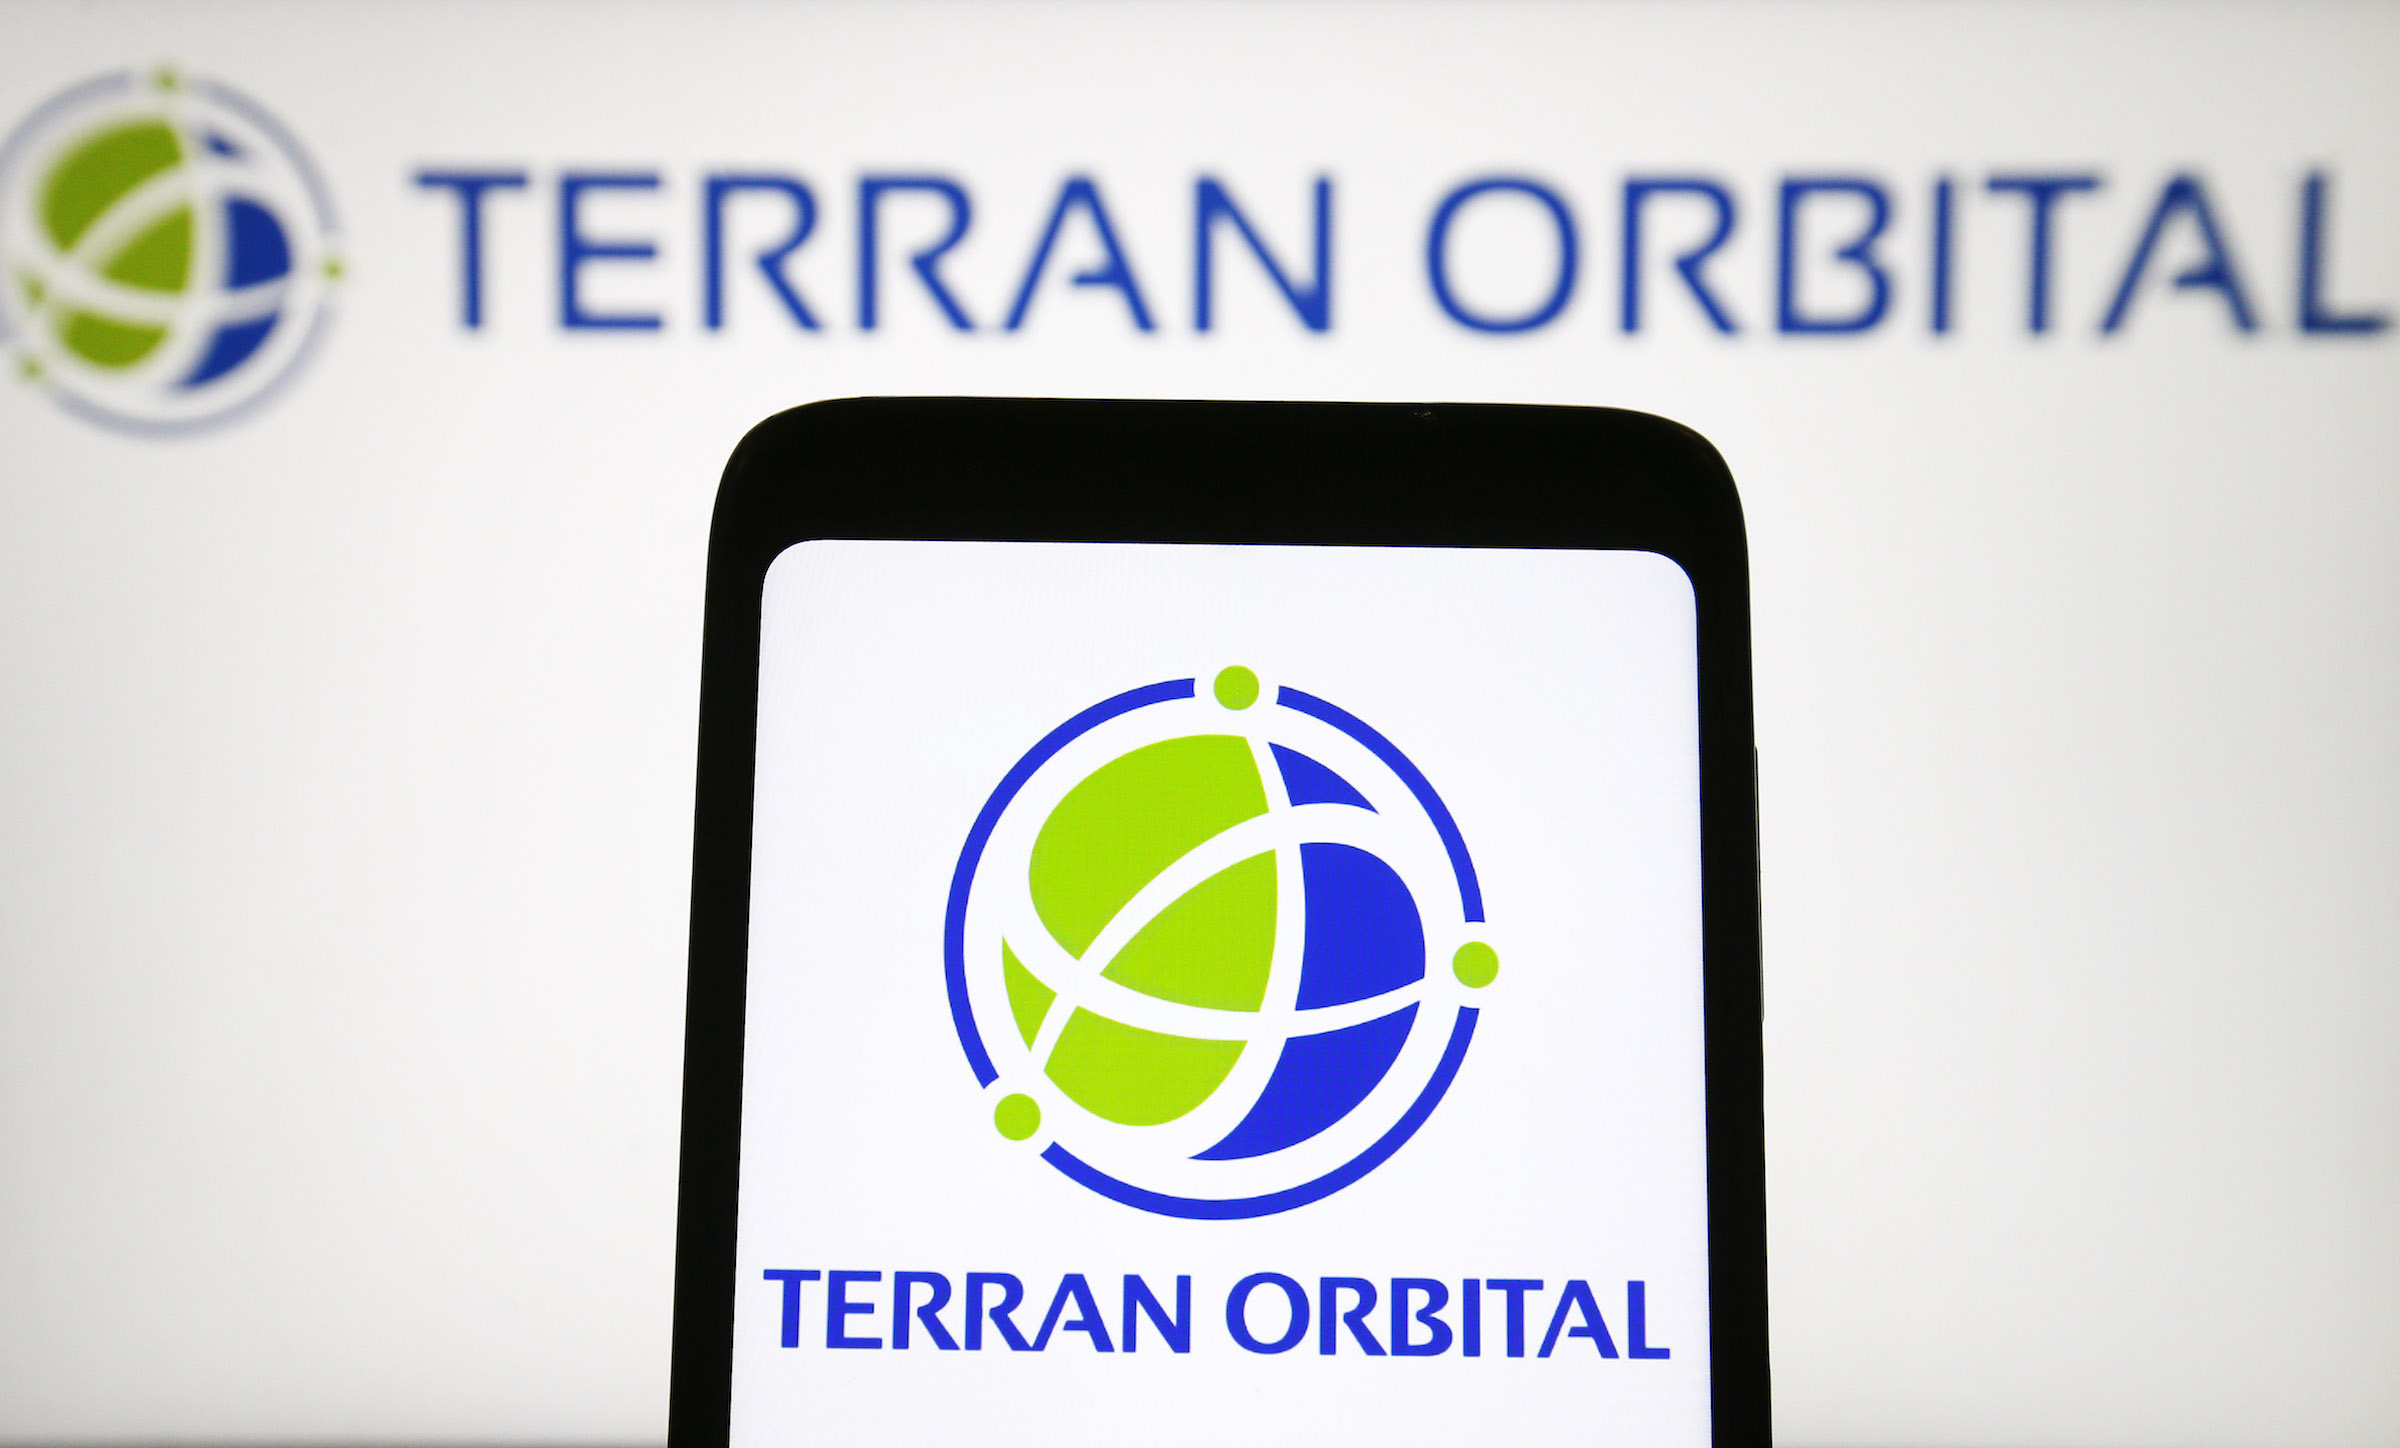 Logotipo orbital terrestre